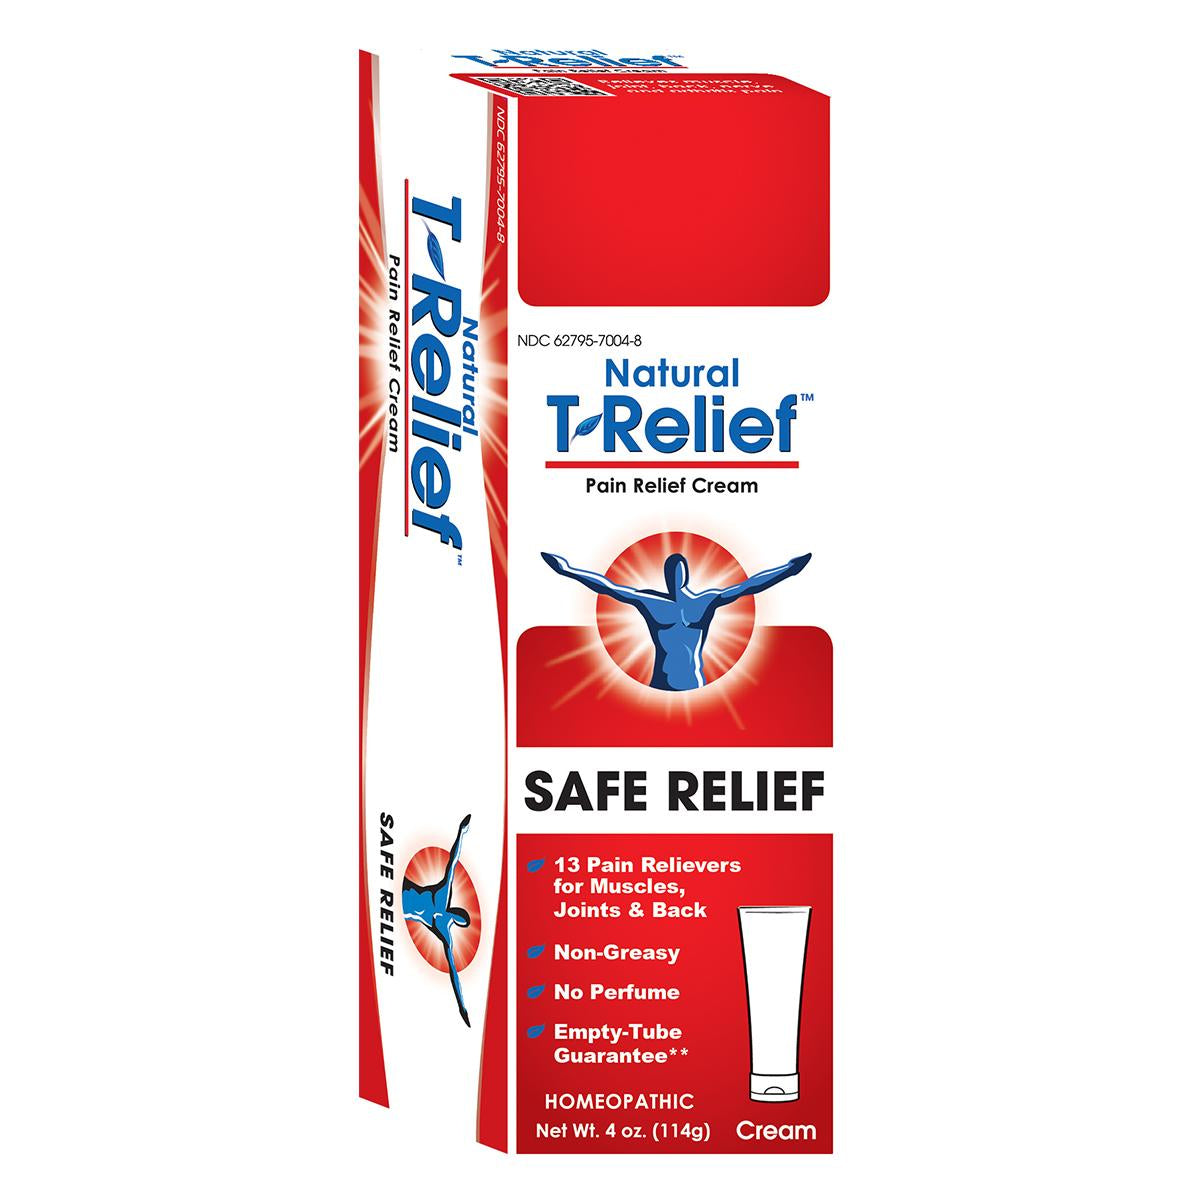 Primary image of T-Relief Cream